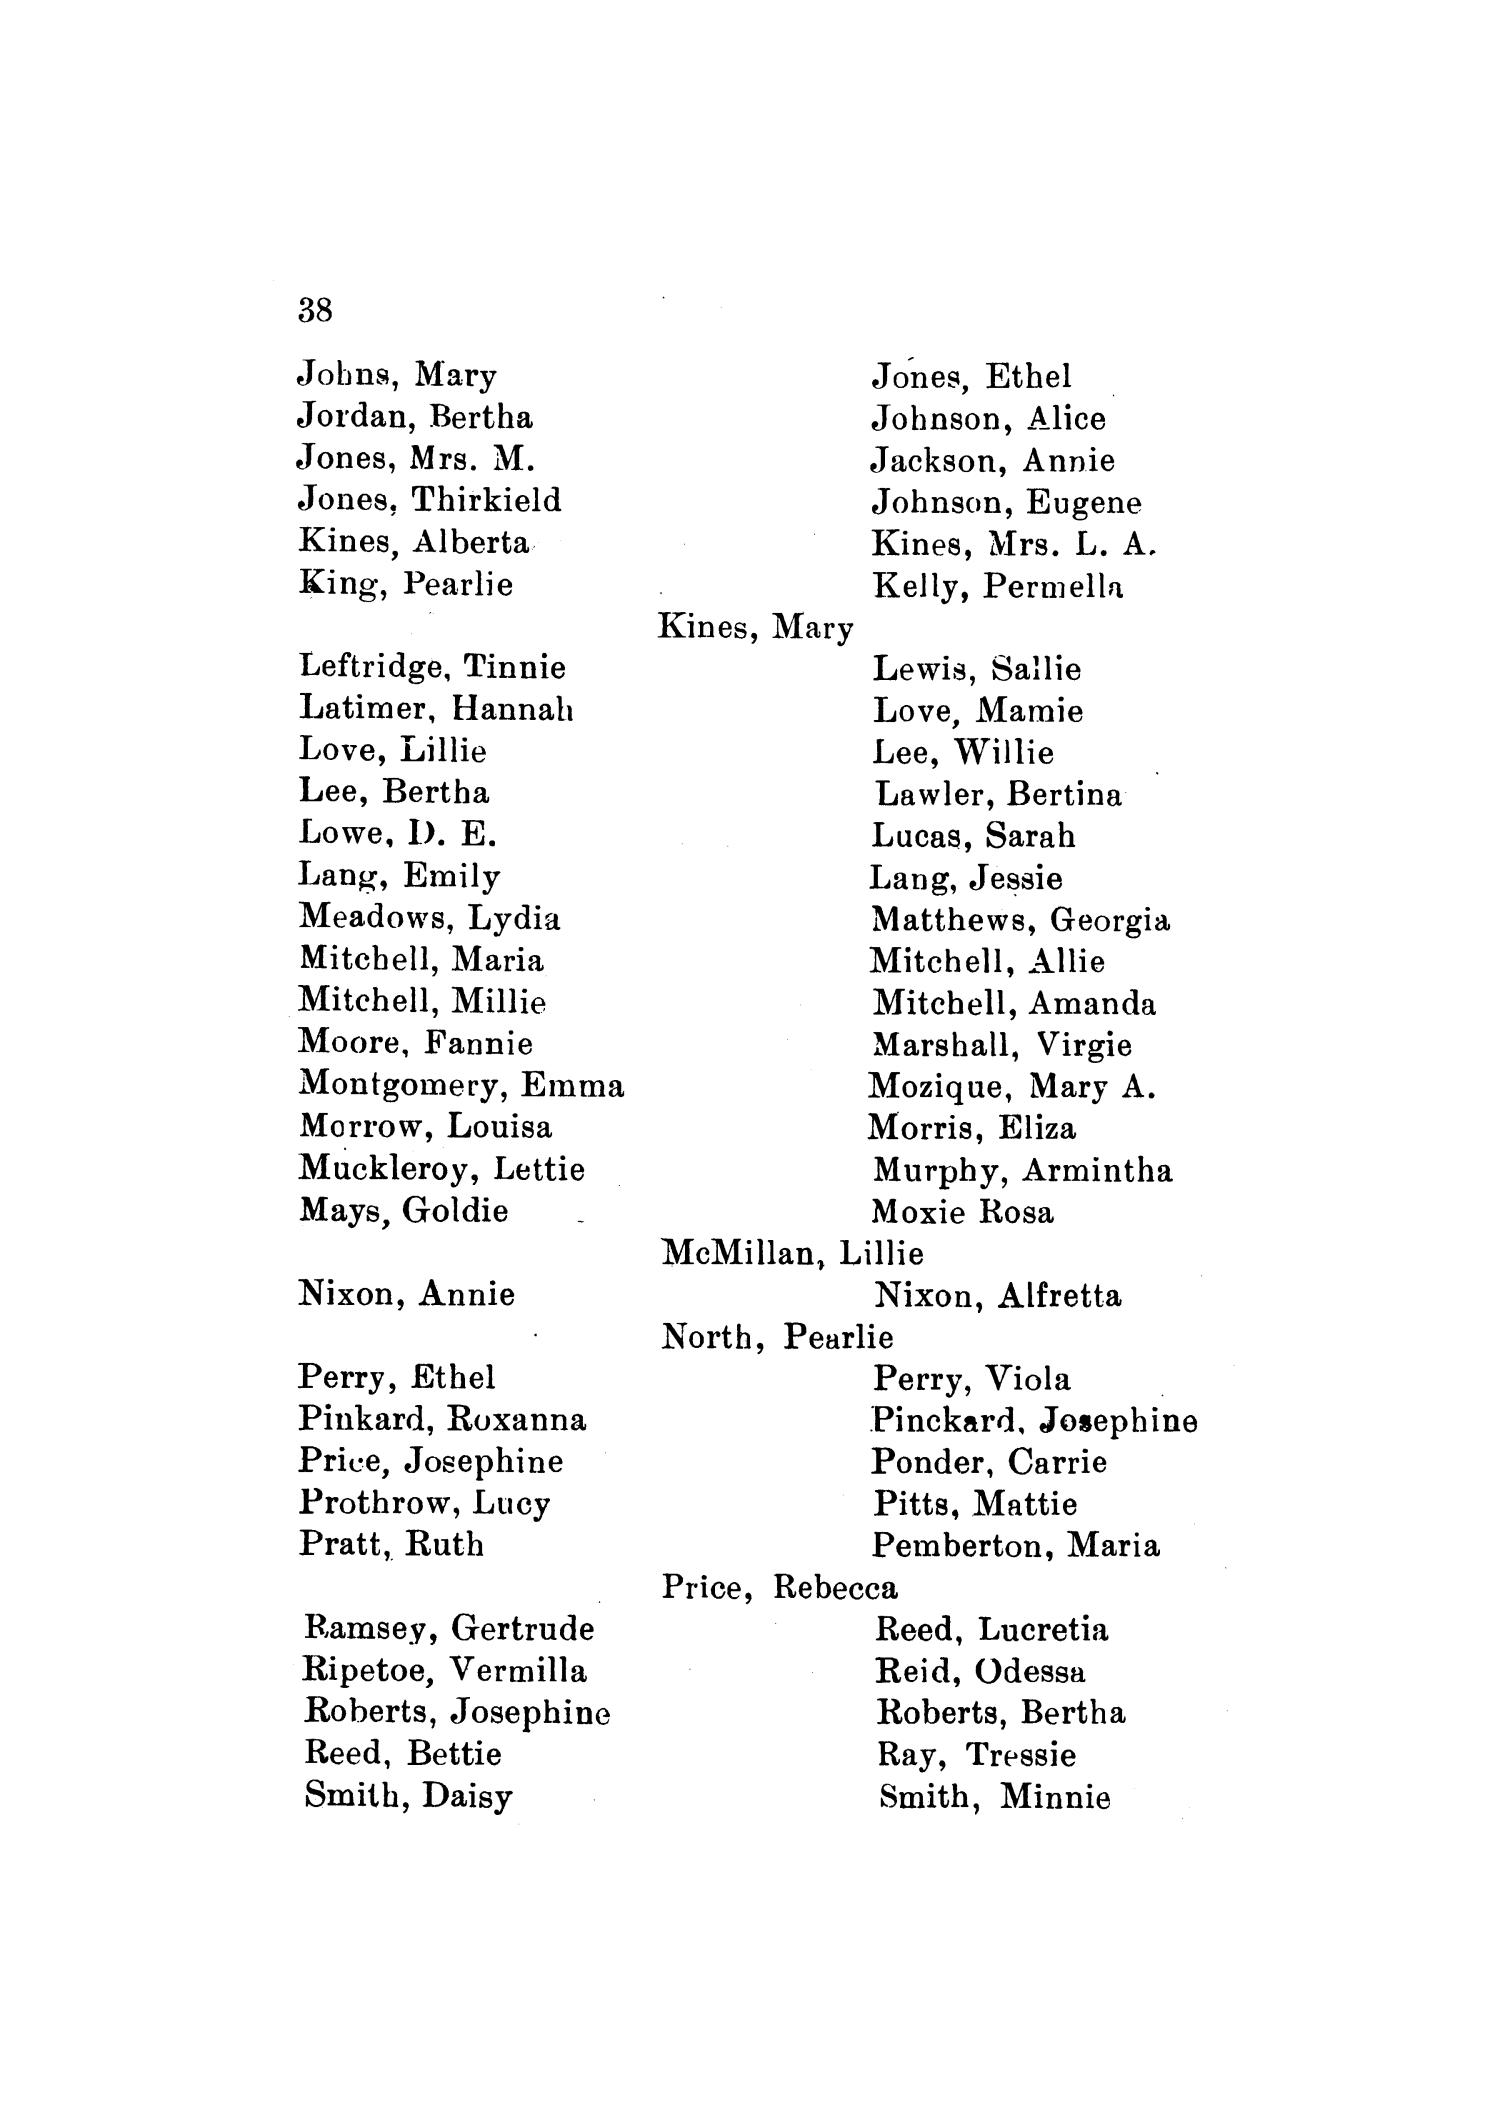 Yearbook of Wiley University, 1902
                                                
                                                    38
                                                